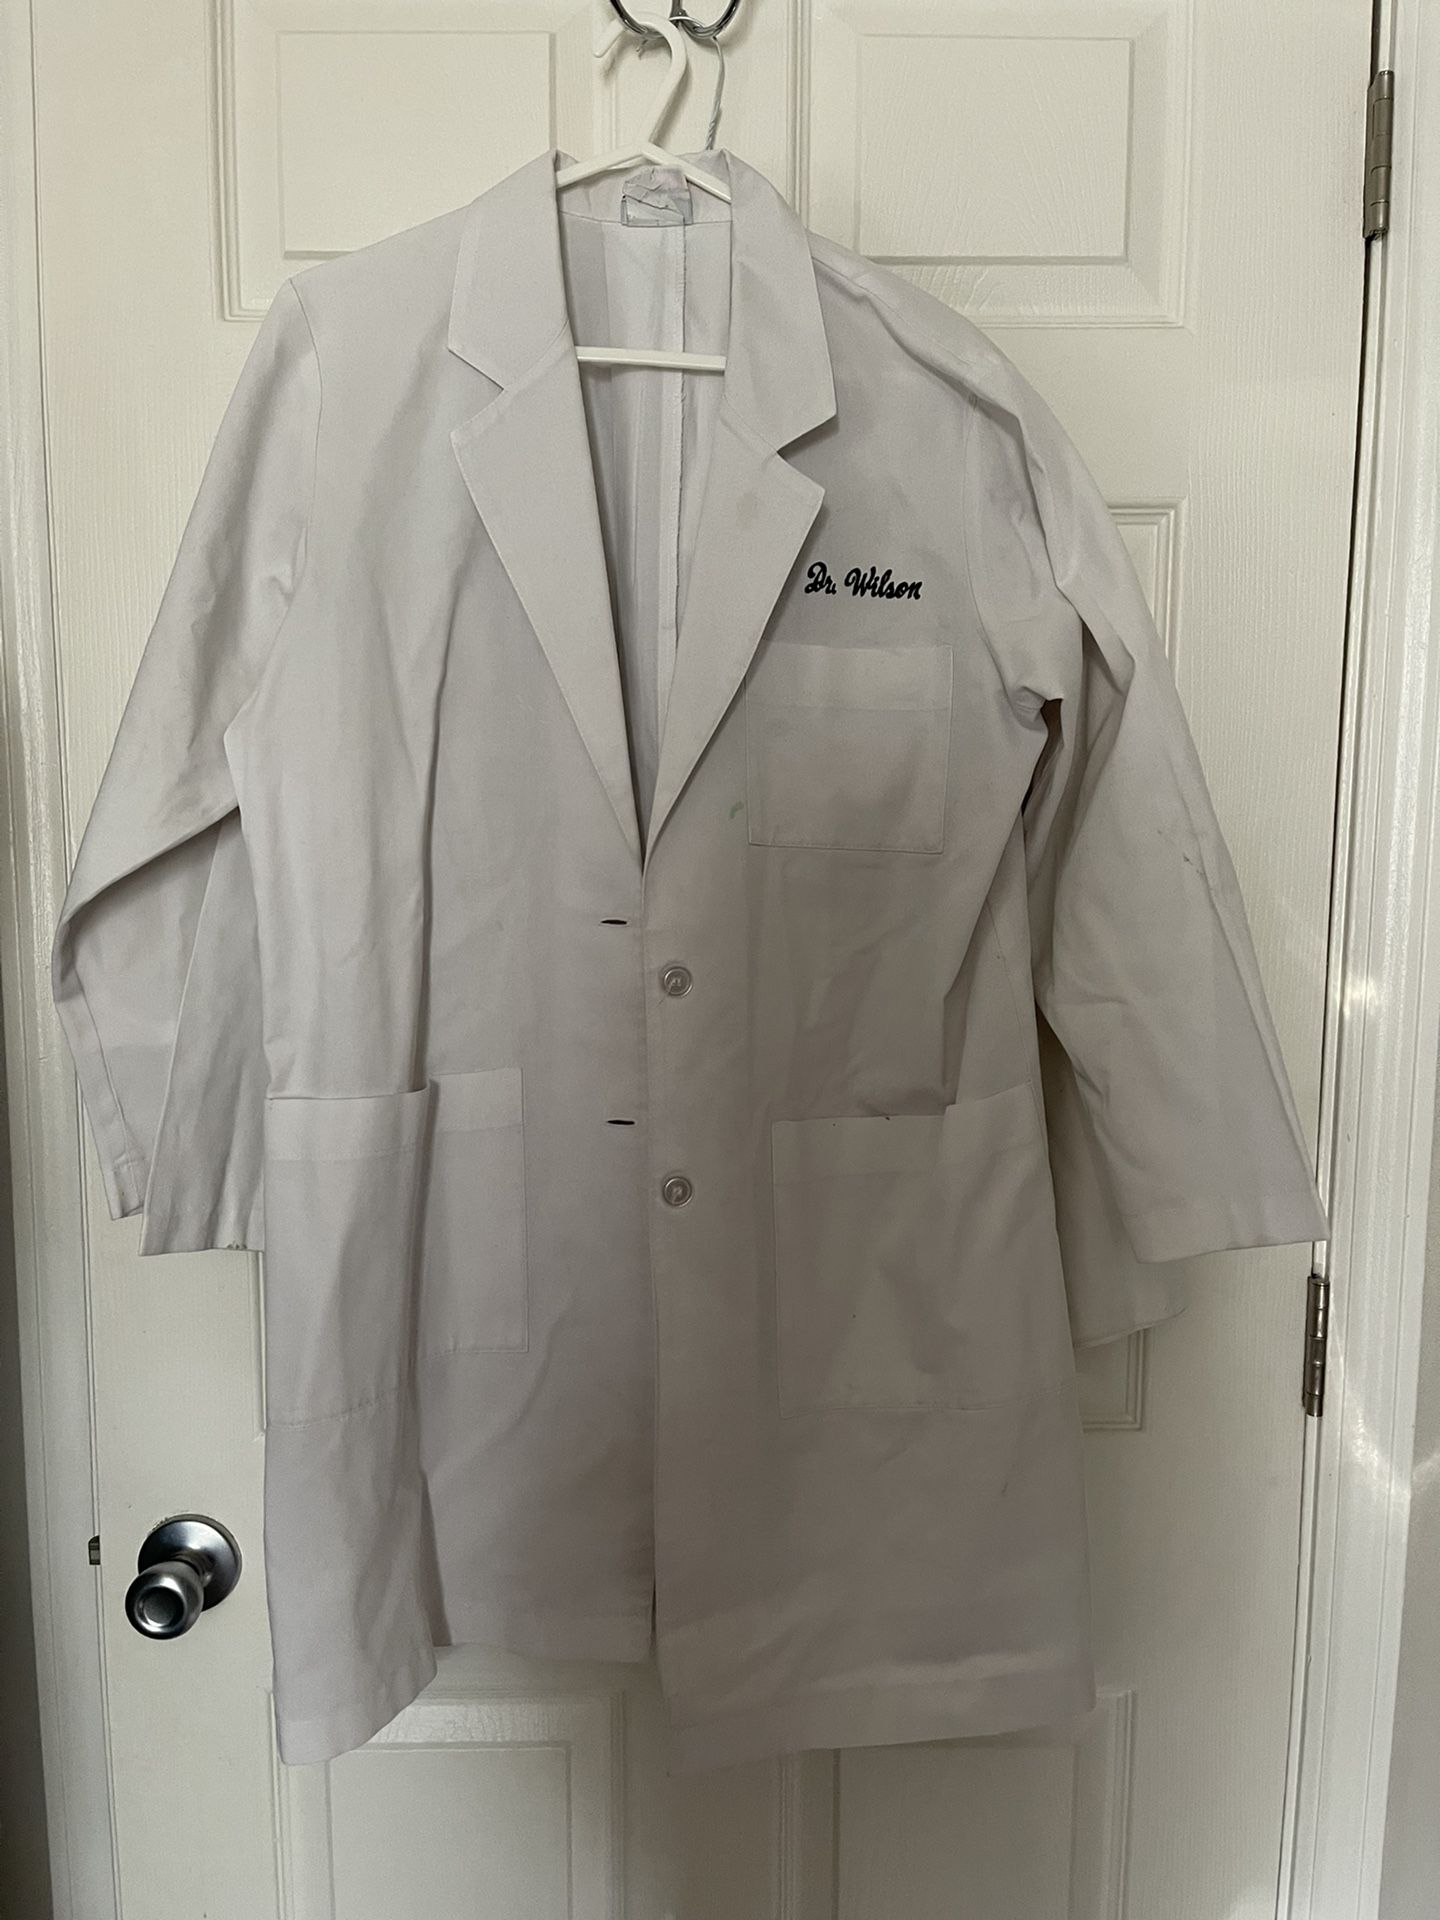 Crest Brand Medical Lab Coat 